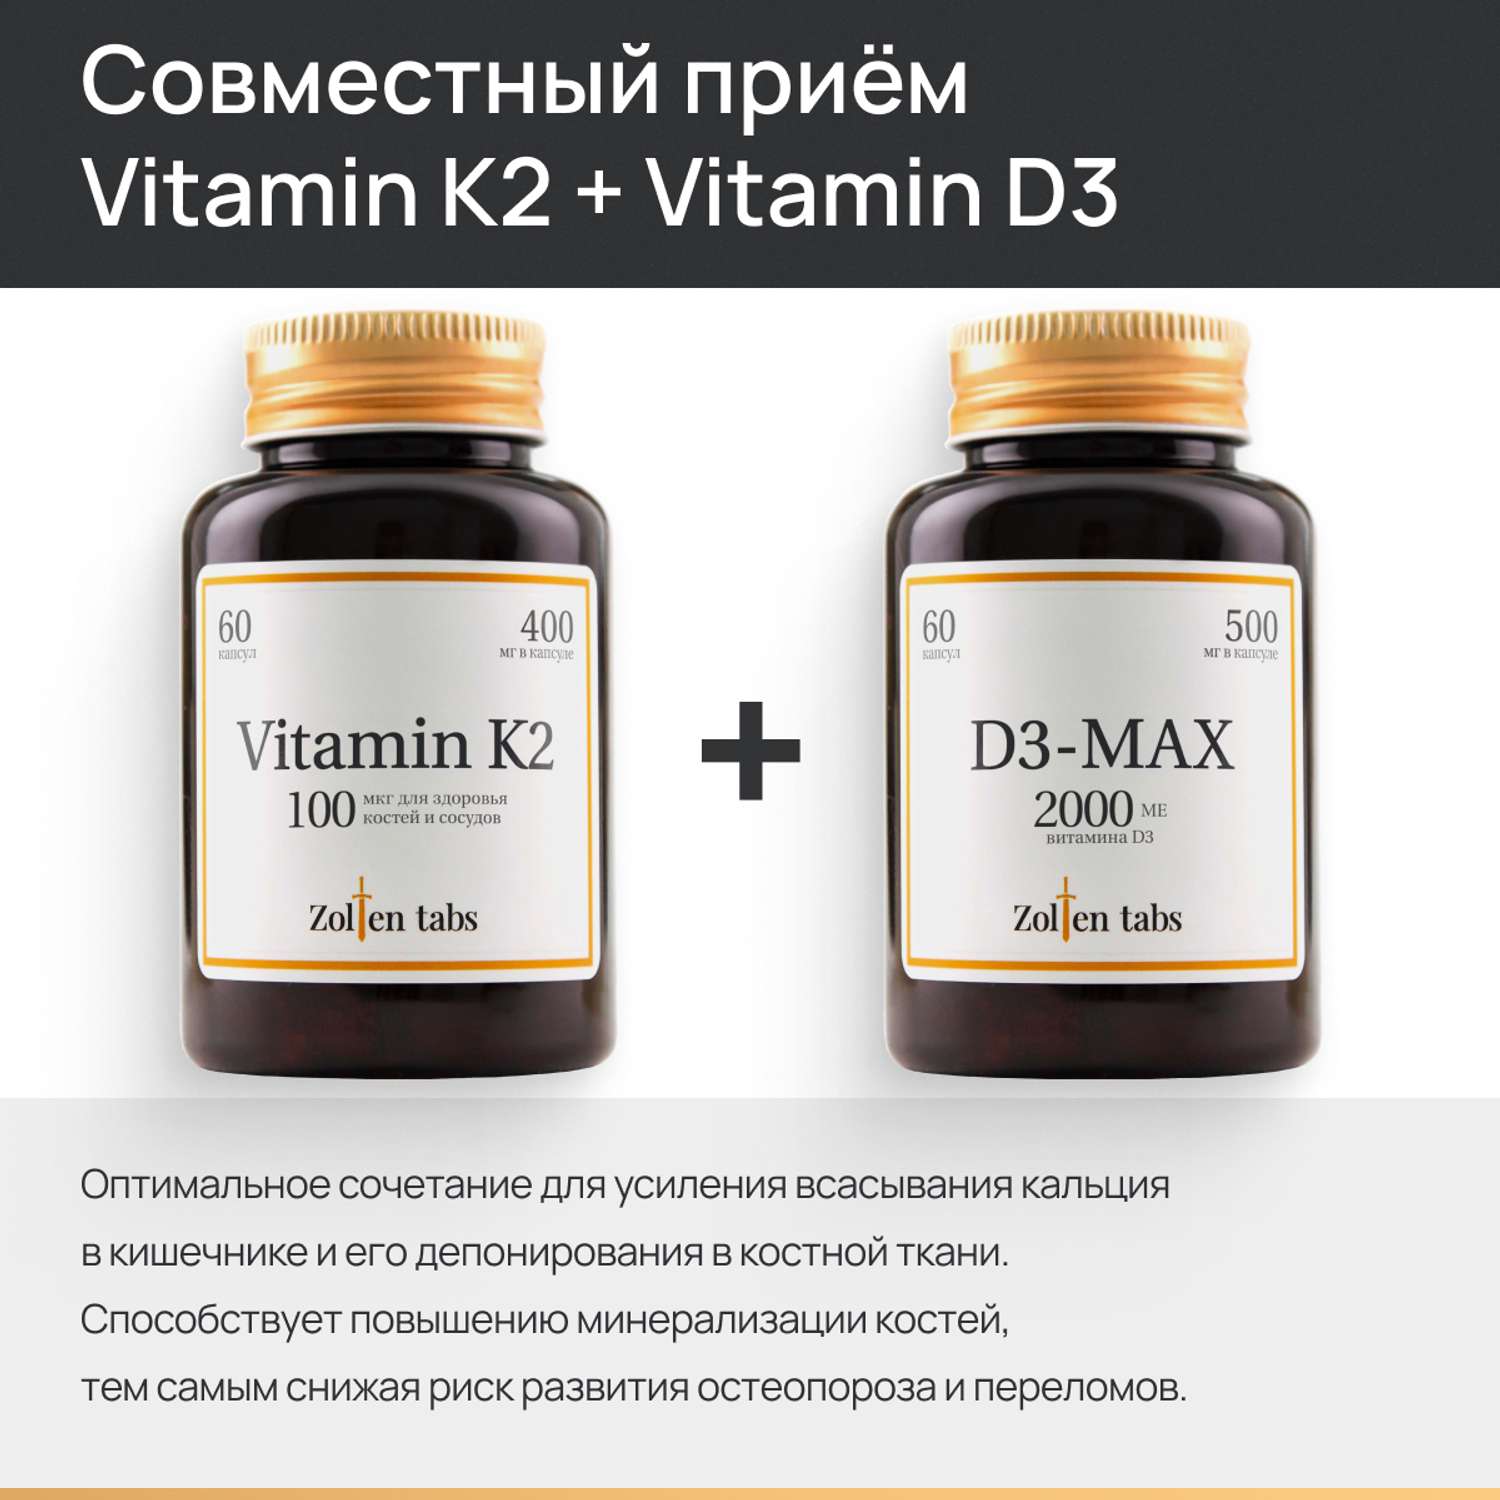 Витамин д3 2000 МЕ Zolten Tabs витаминный комплекс для женщин и мужчин 60 капсул - фото 4